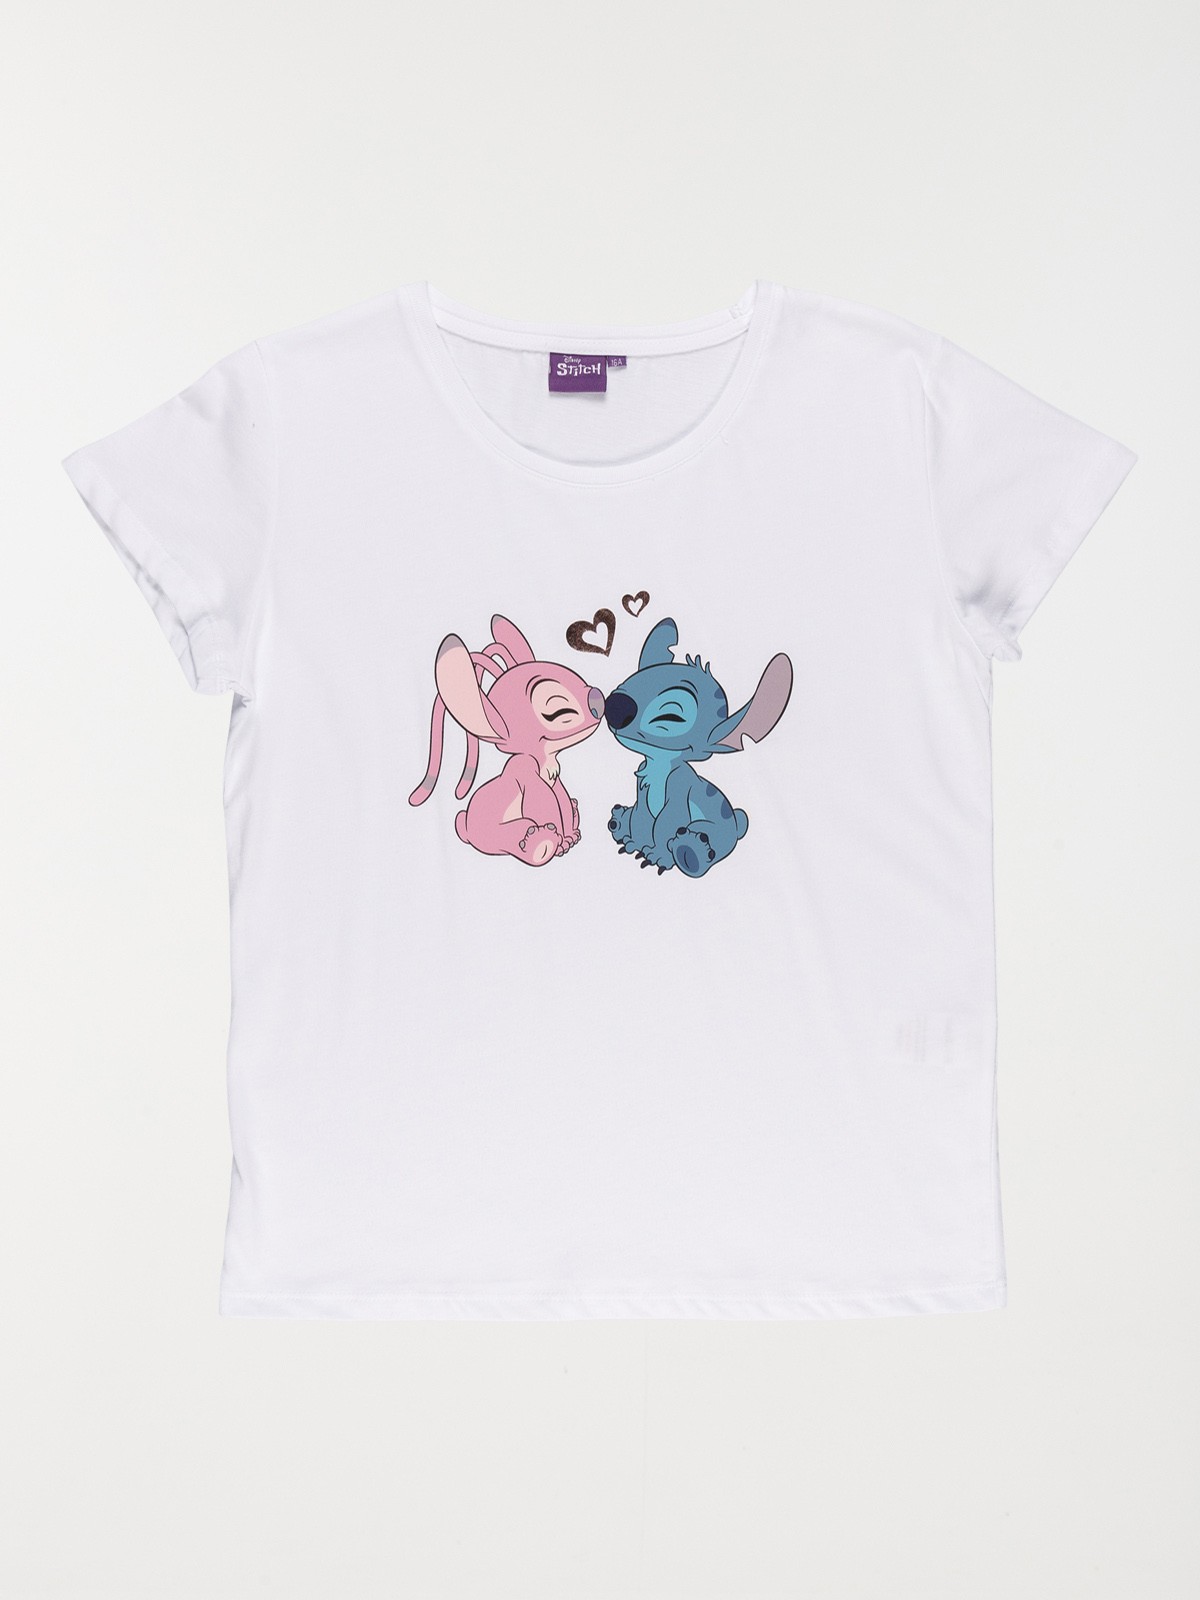 T-shirt Stitch et Angel fille (XXS-M) - DistriCenter